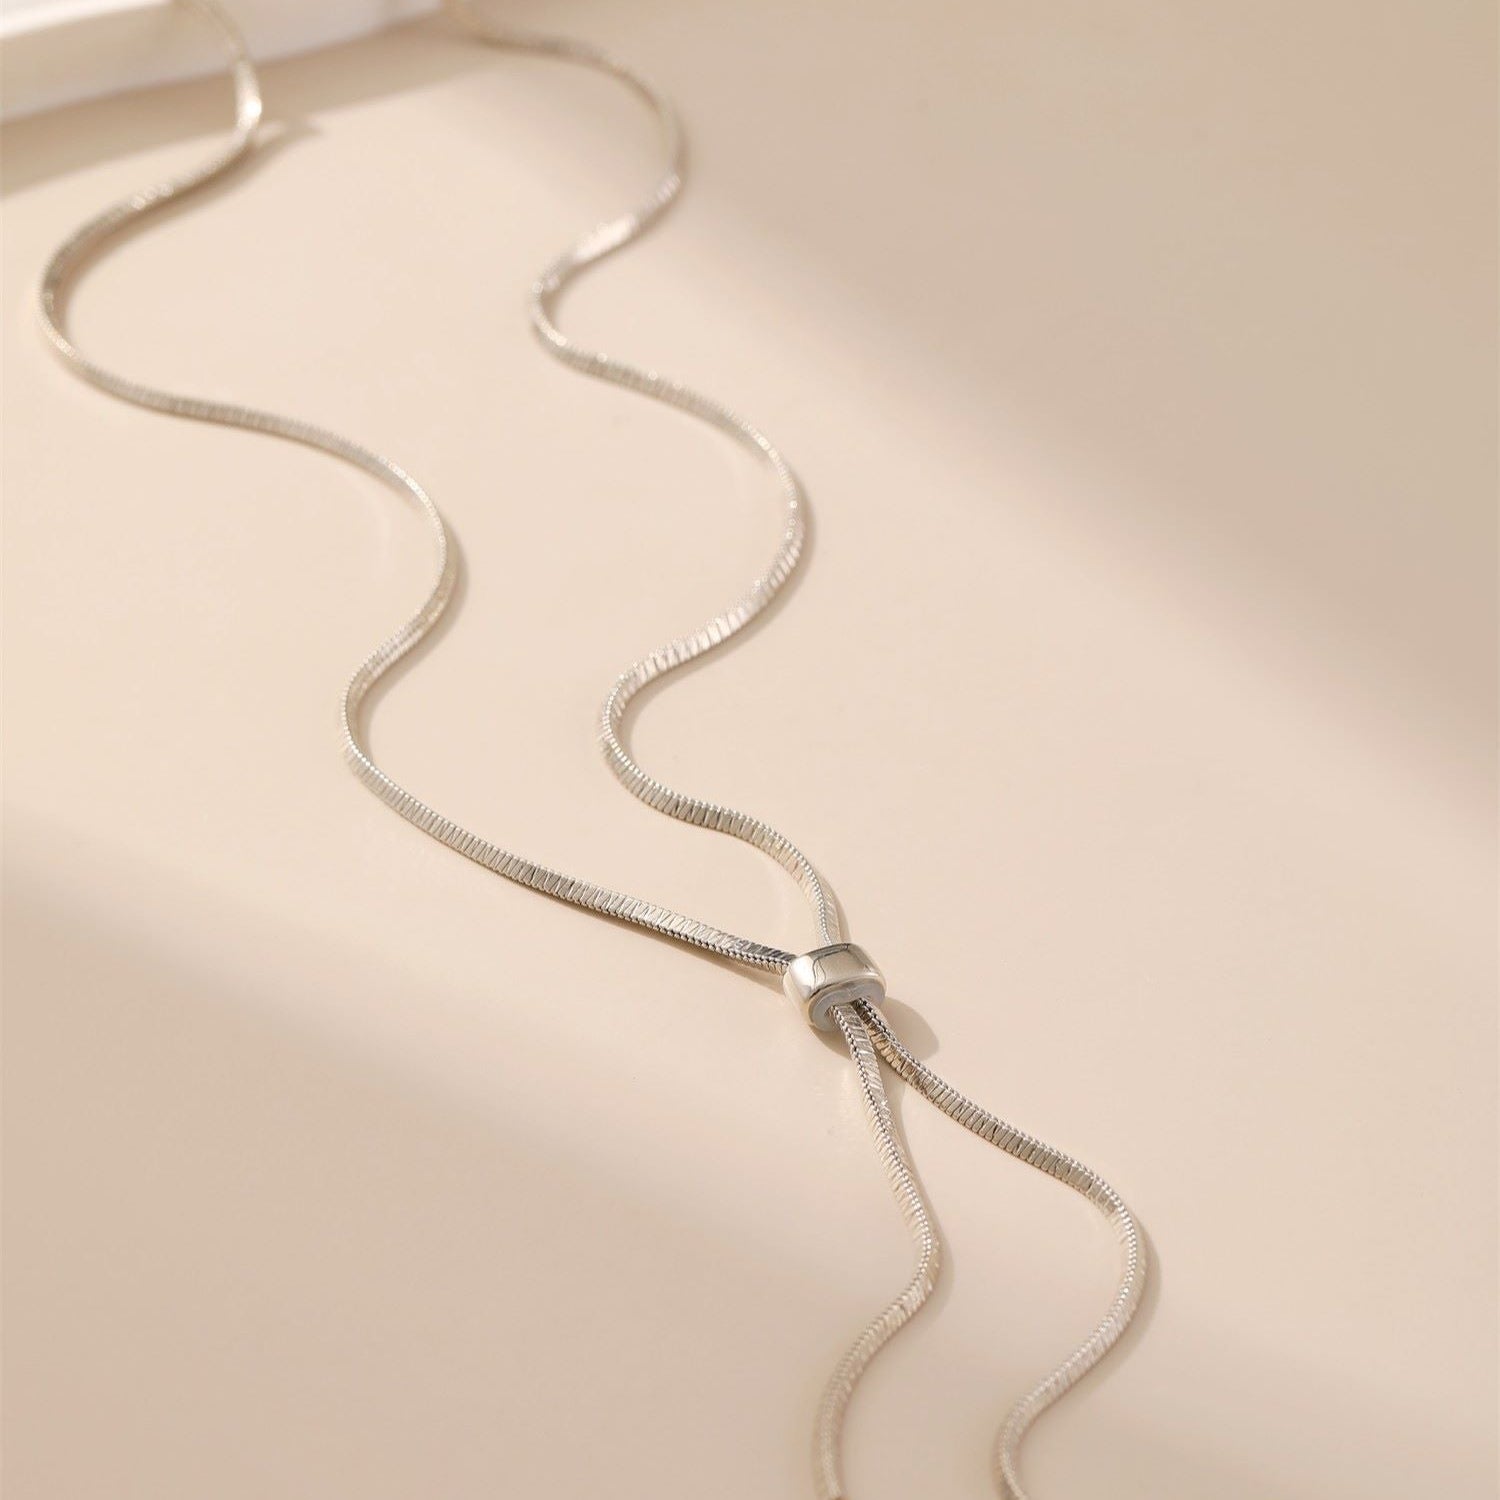 Gold Knot Chain Necklace - Alarita